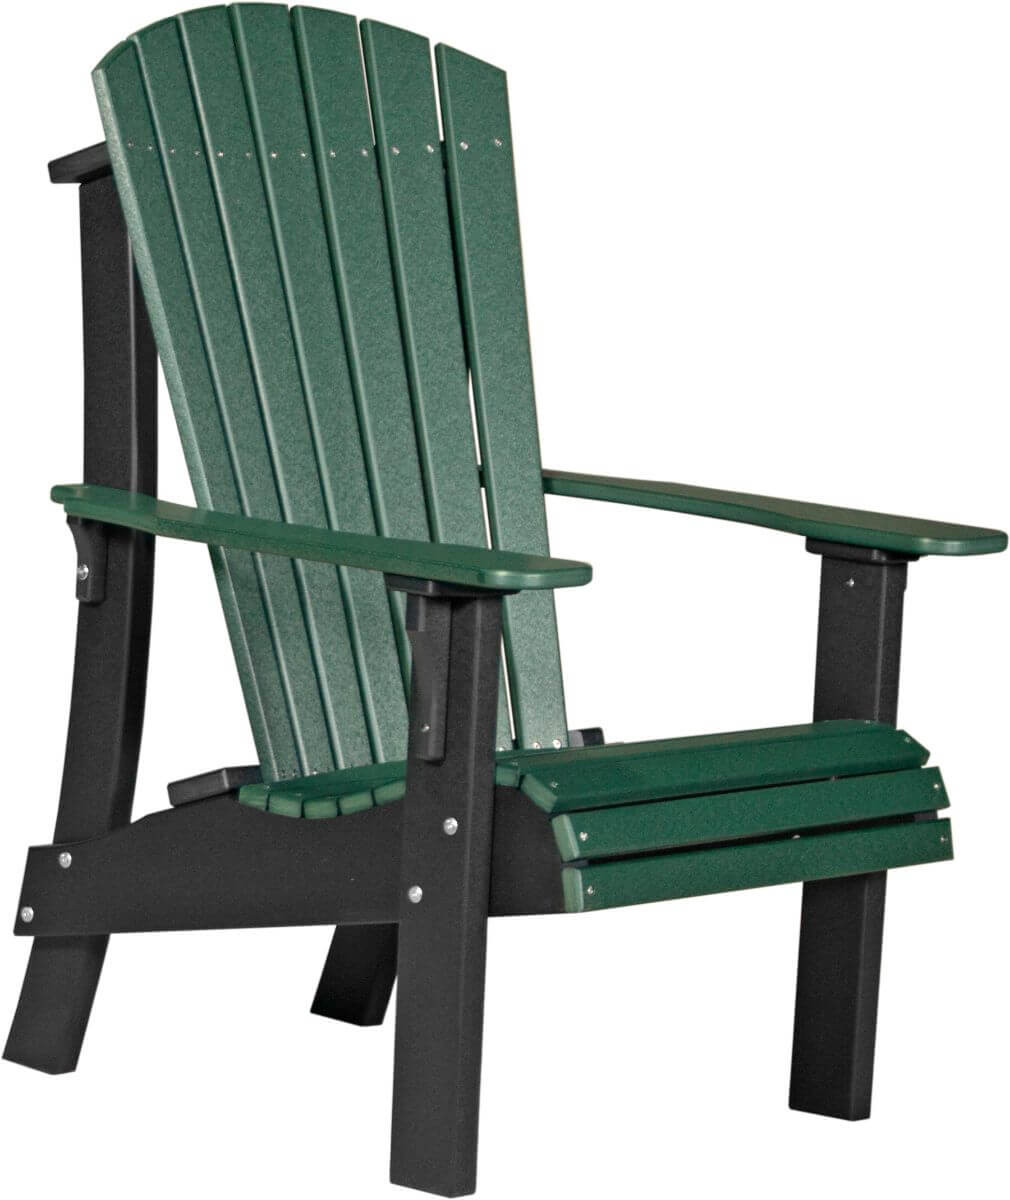 Green and Black Rockaway Highback Adirondack Chair